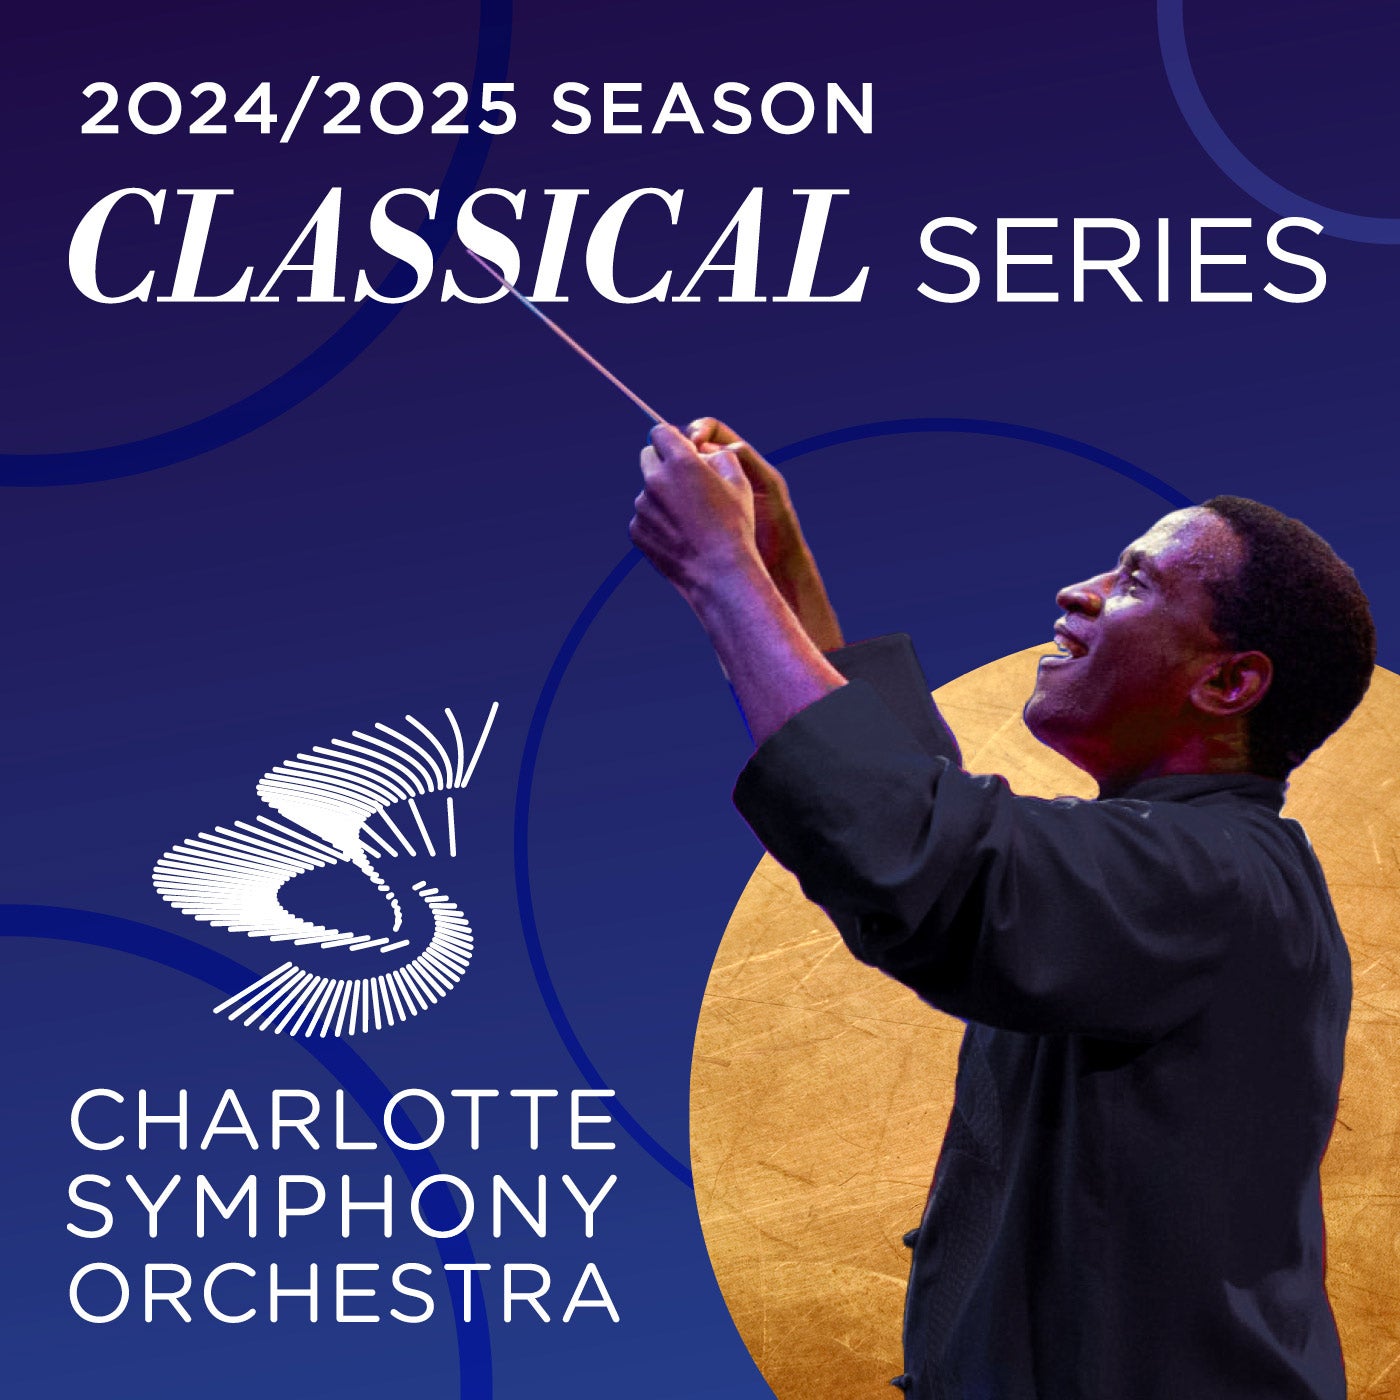 Charlotte Symphony: Handel's Messiah